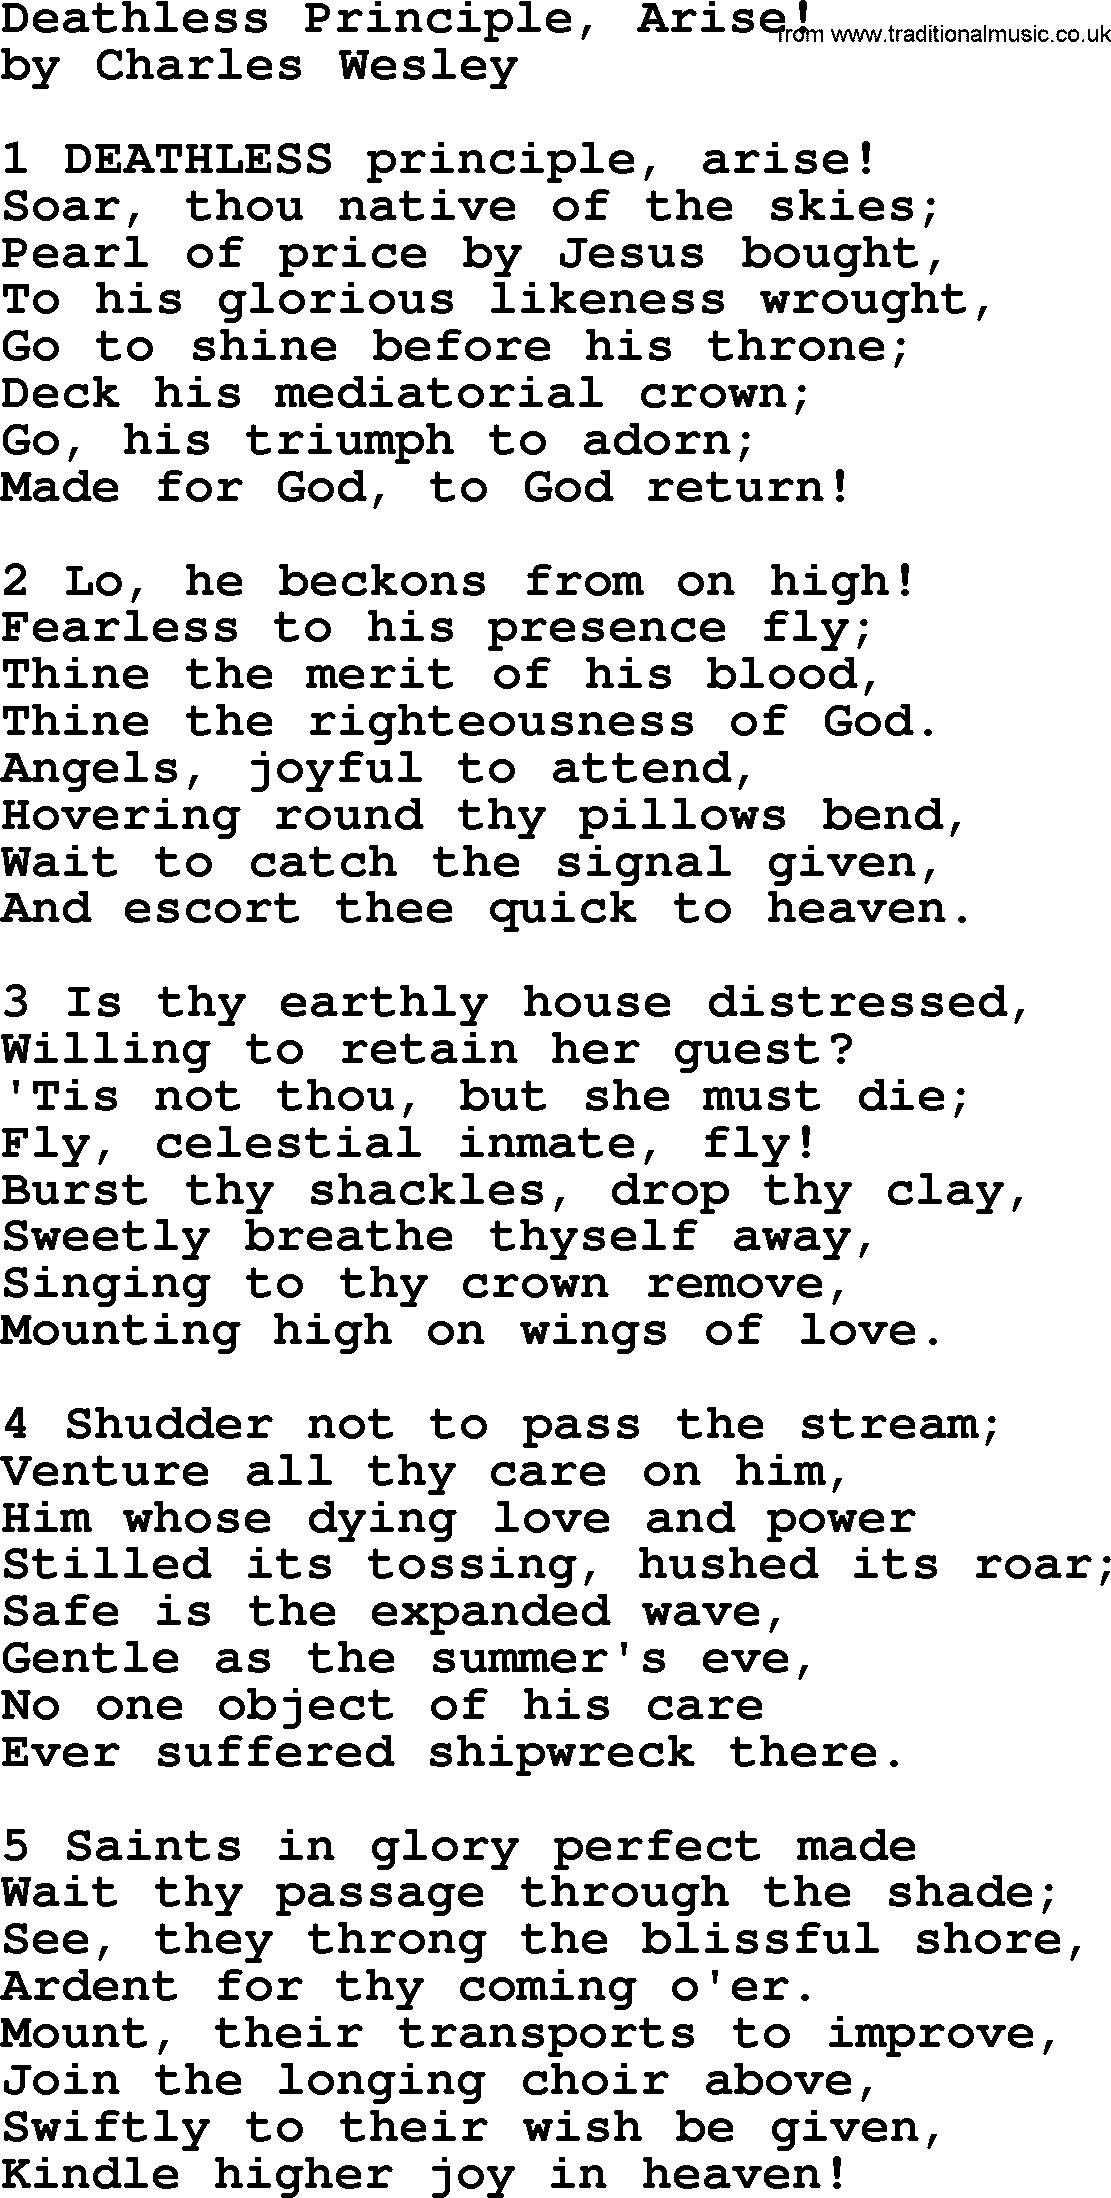 Charles Wesley hymn: Deathless Principle, Arise!, lyrics